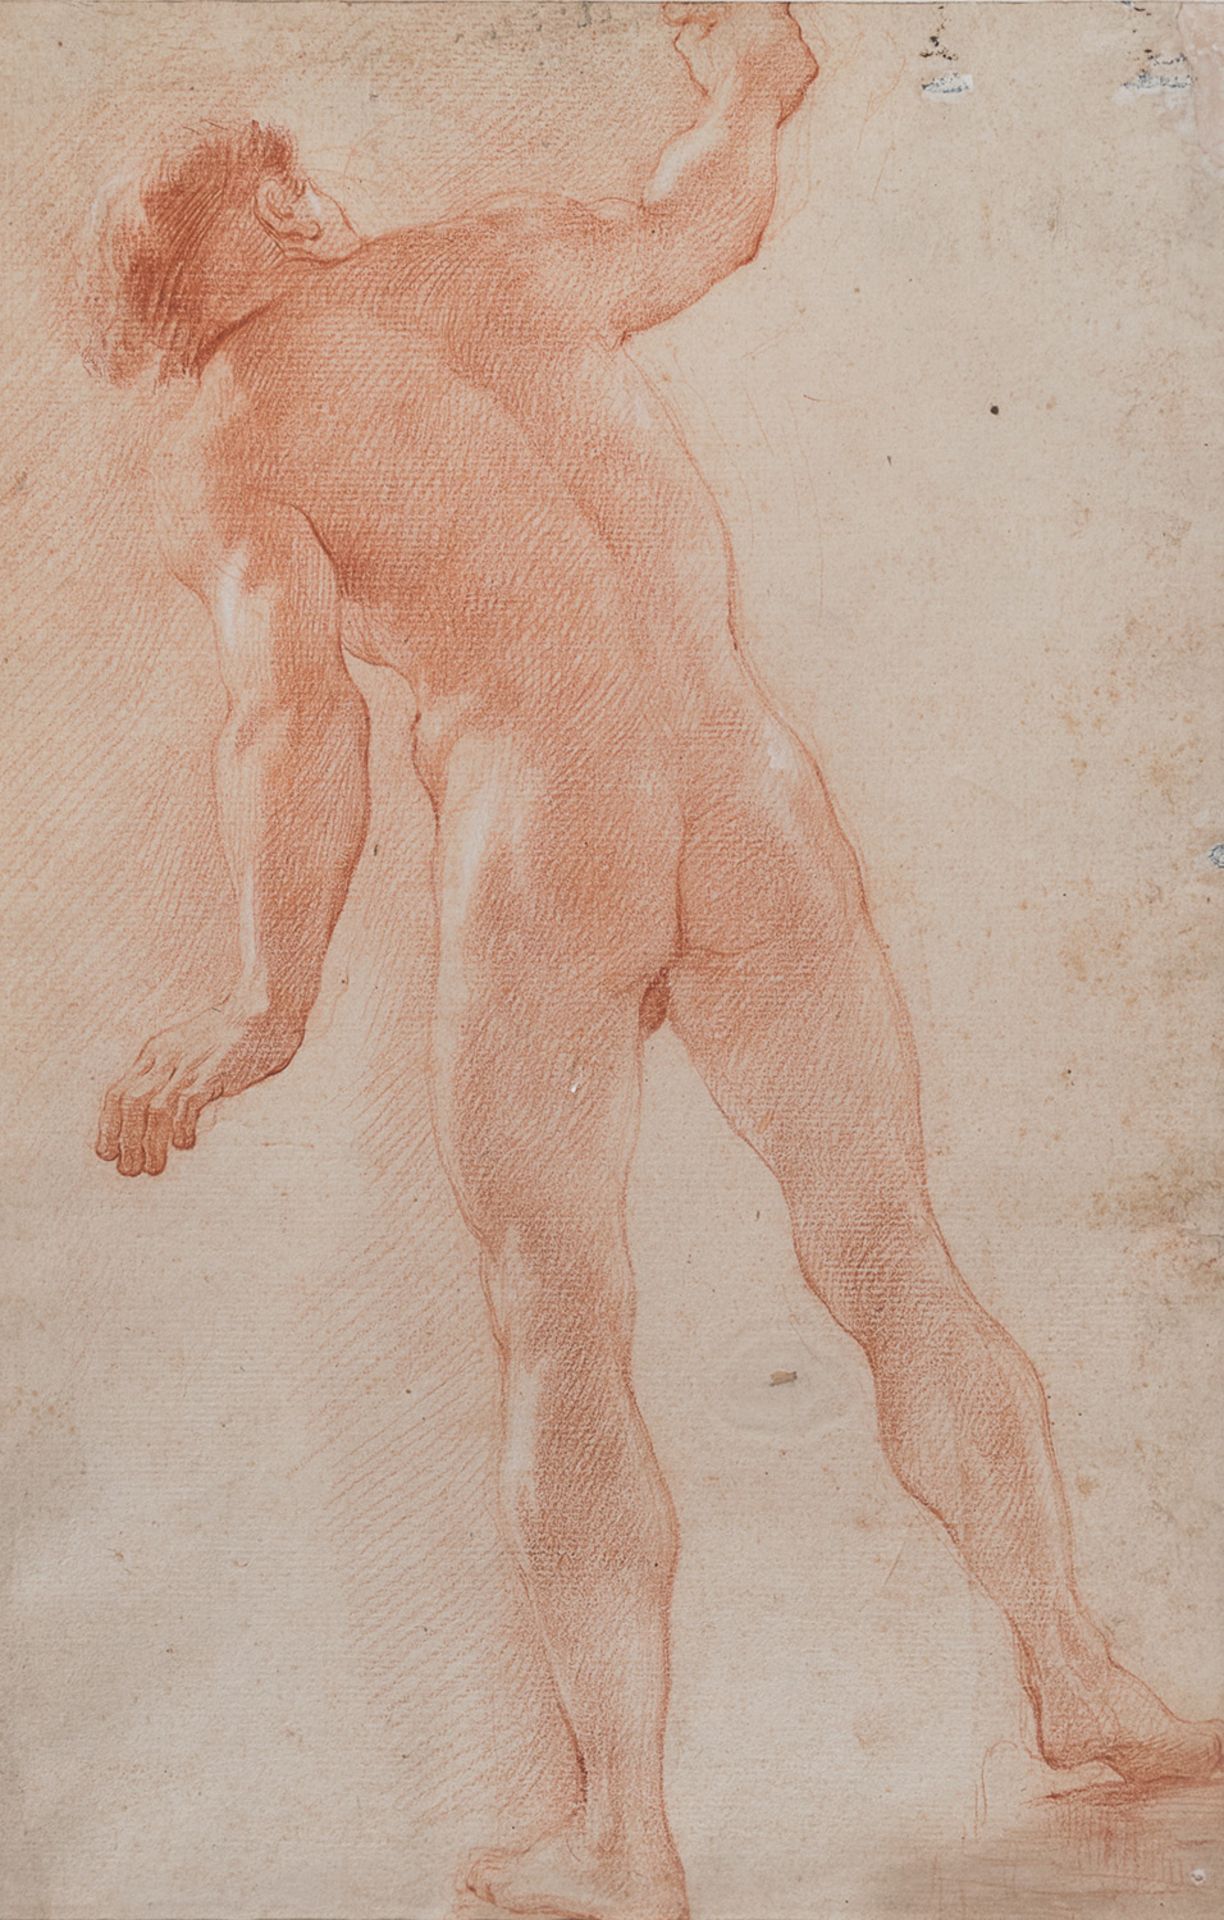 SANGUINE DRAWING BY GAETANO GANDOLFI (1734-1802)